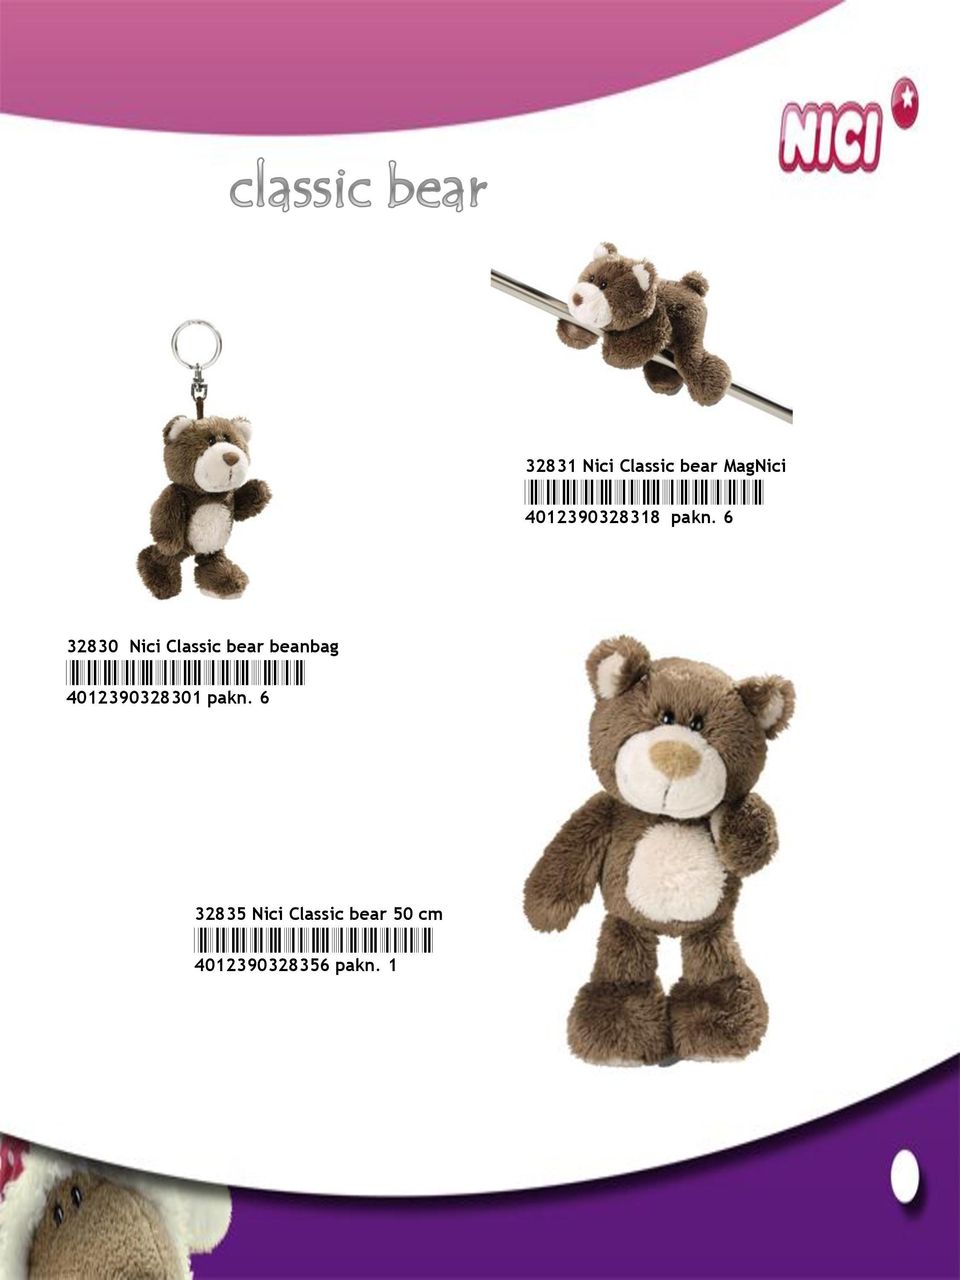 6 32830 Nici Classic bear beanbag *4012390328301*